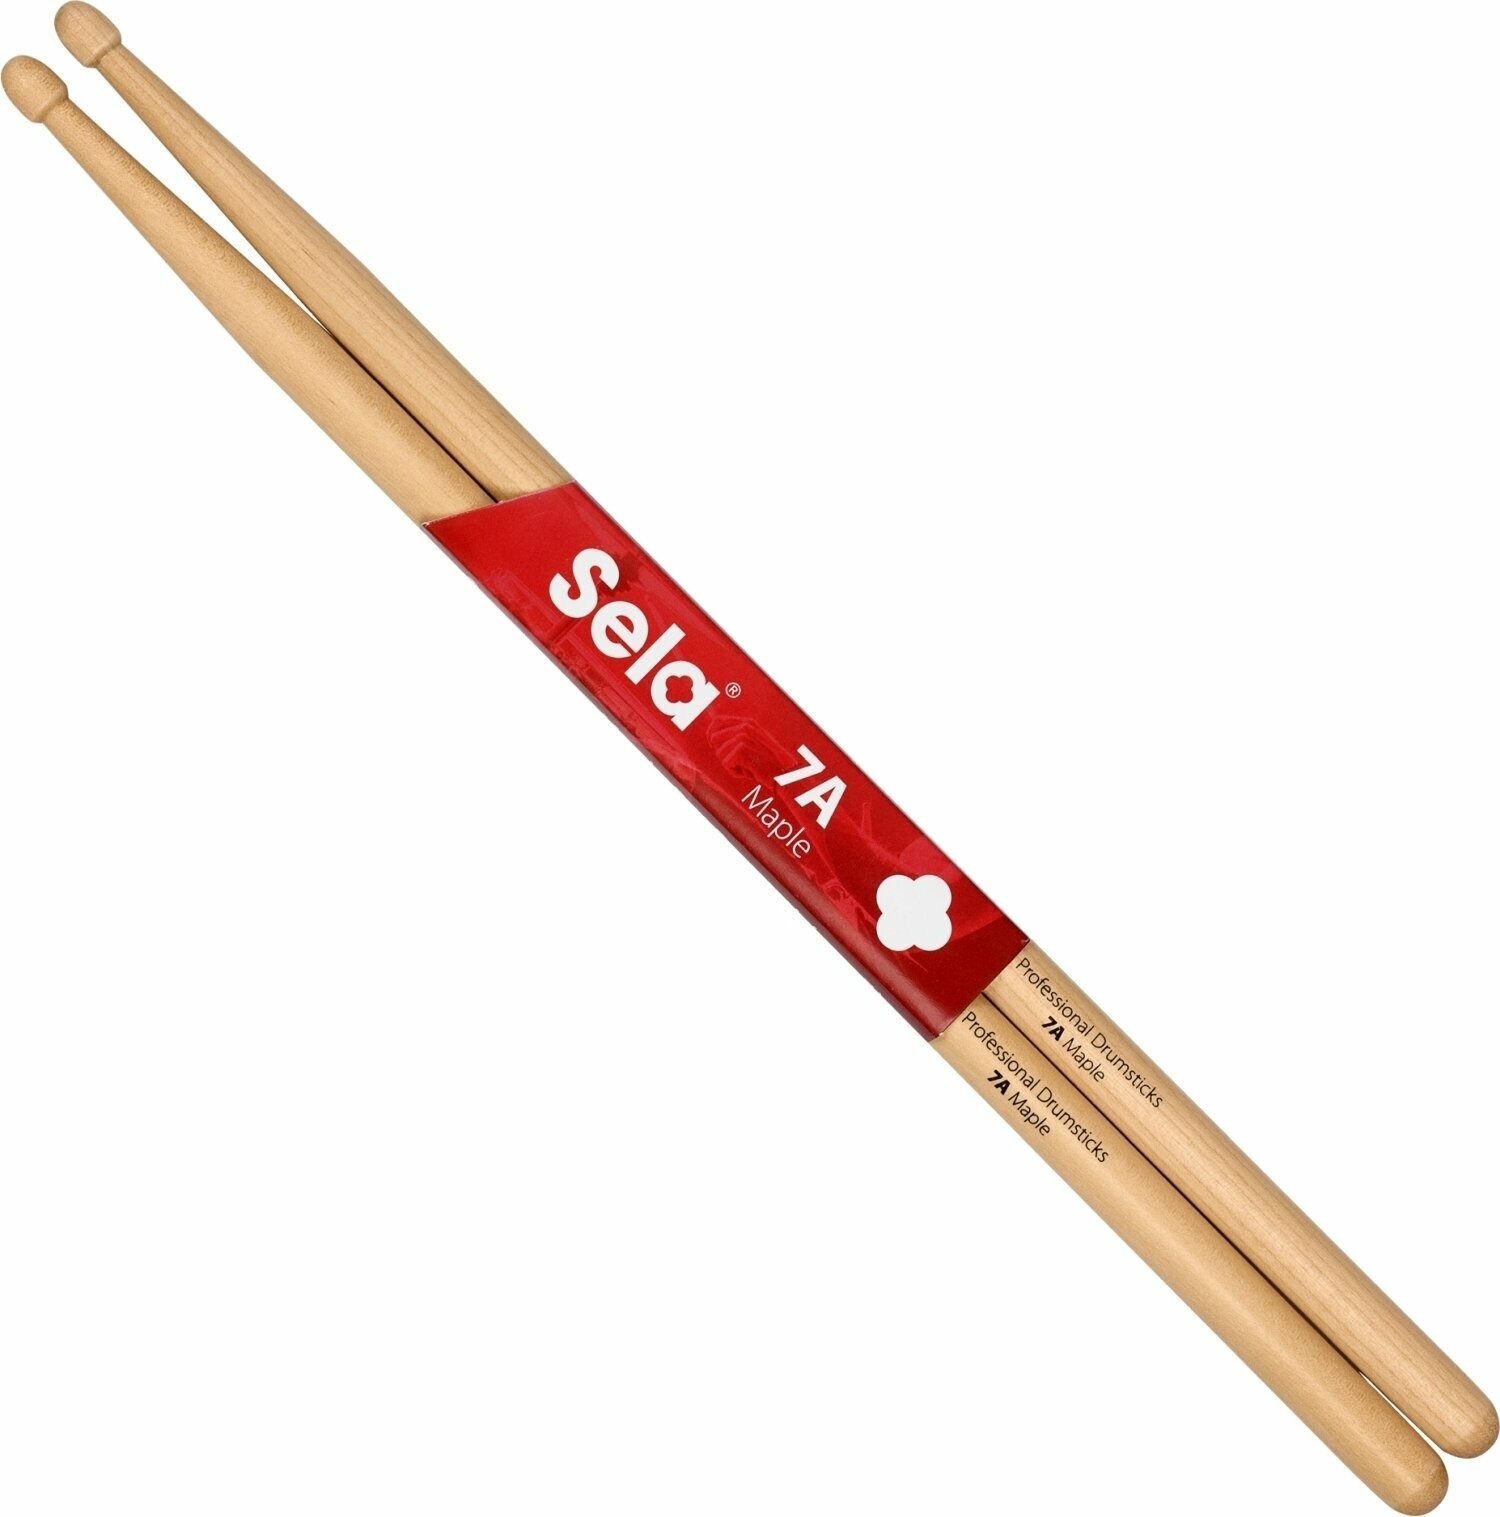 Drumstokken Sela SE 275 Professional Drumsticks 7A - 6 Pair Drumstokken